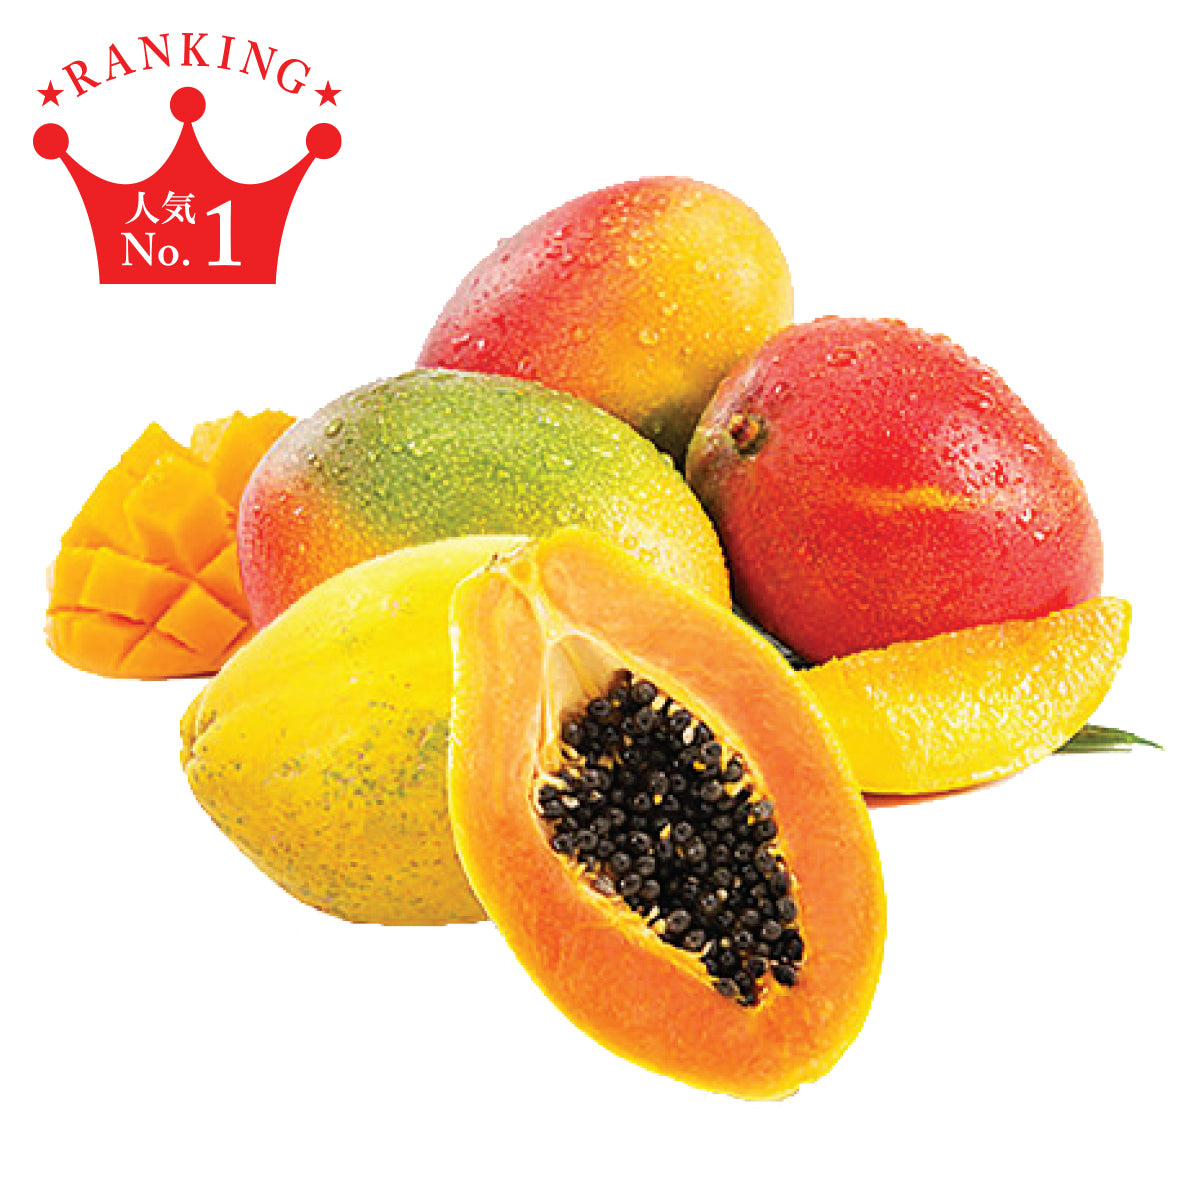 Mango & Papaya Set